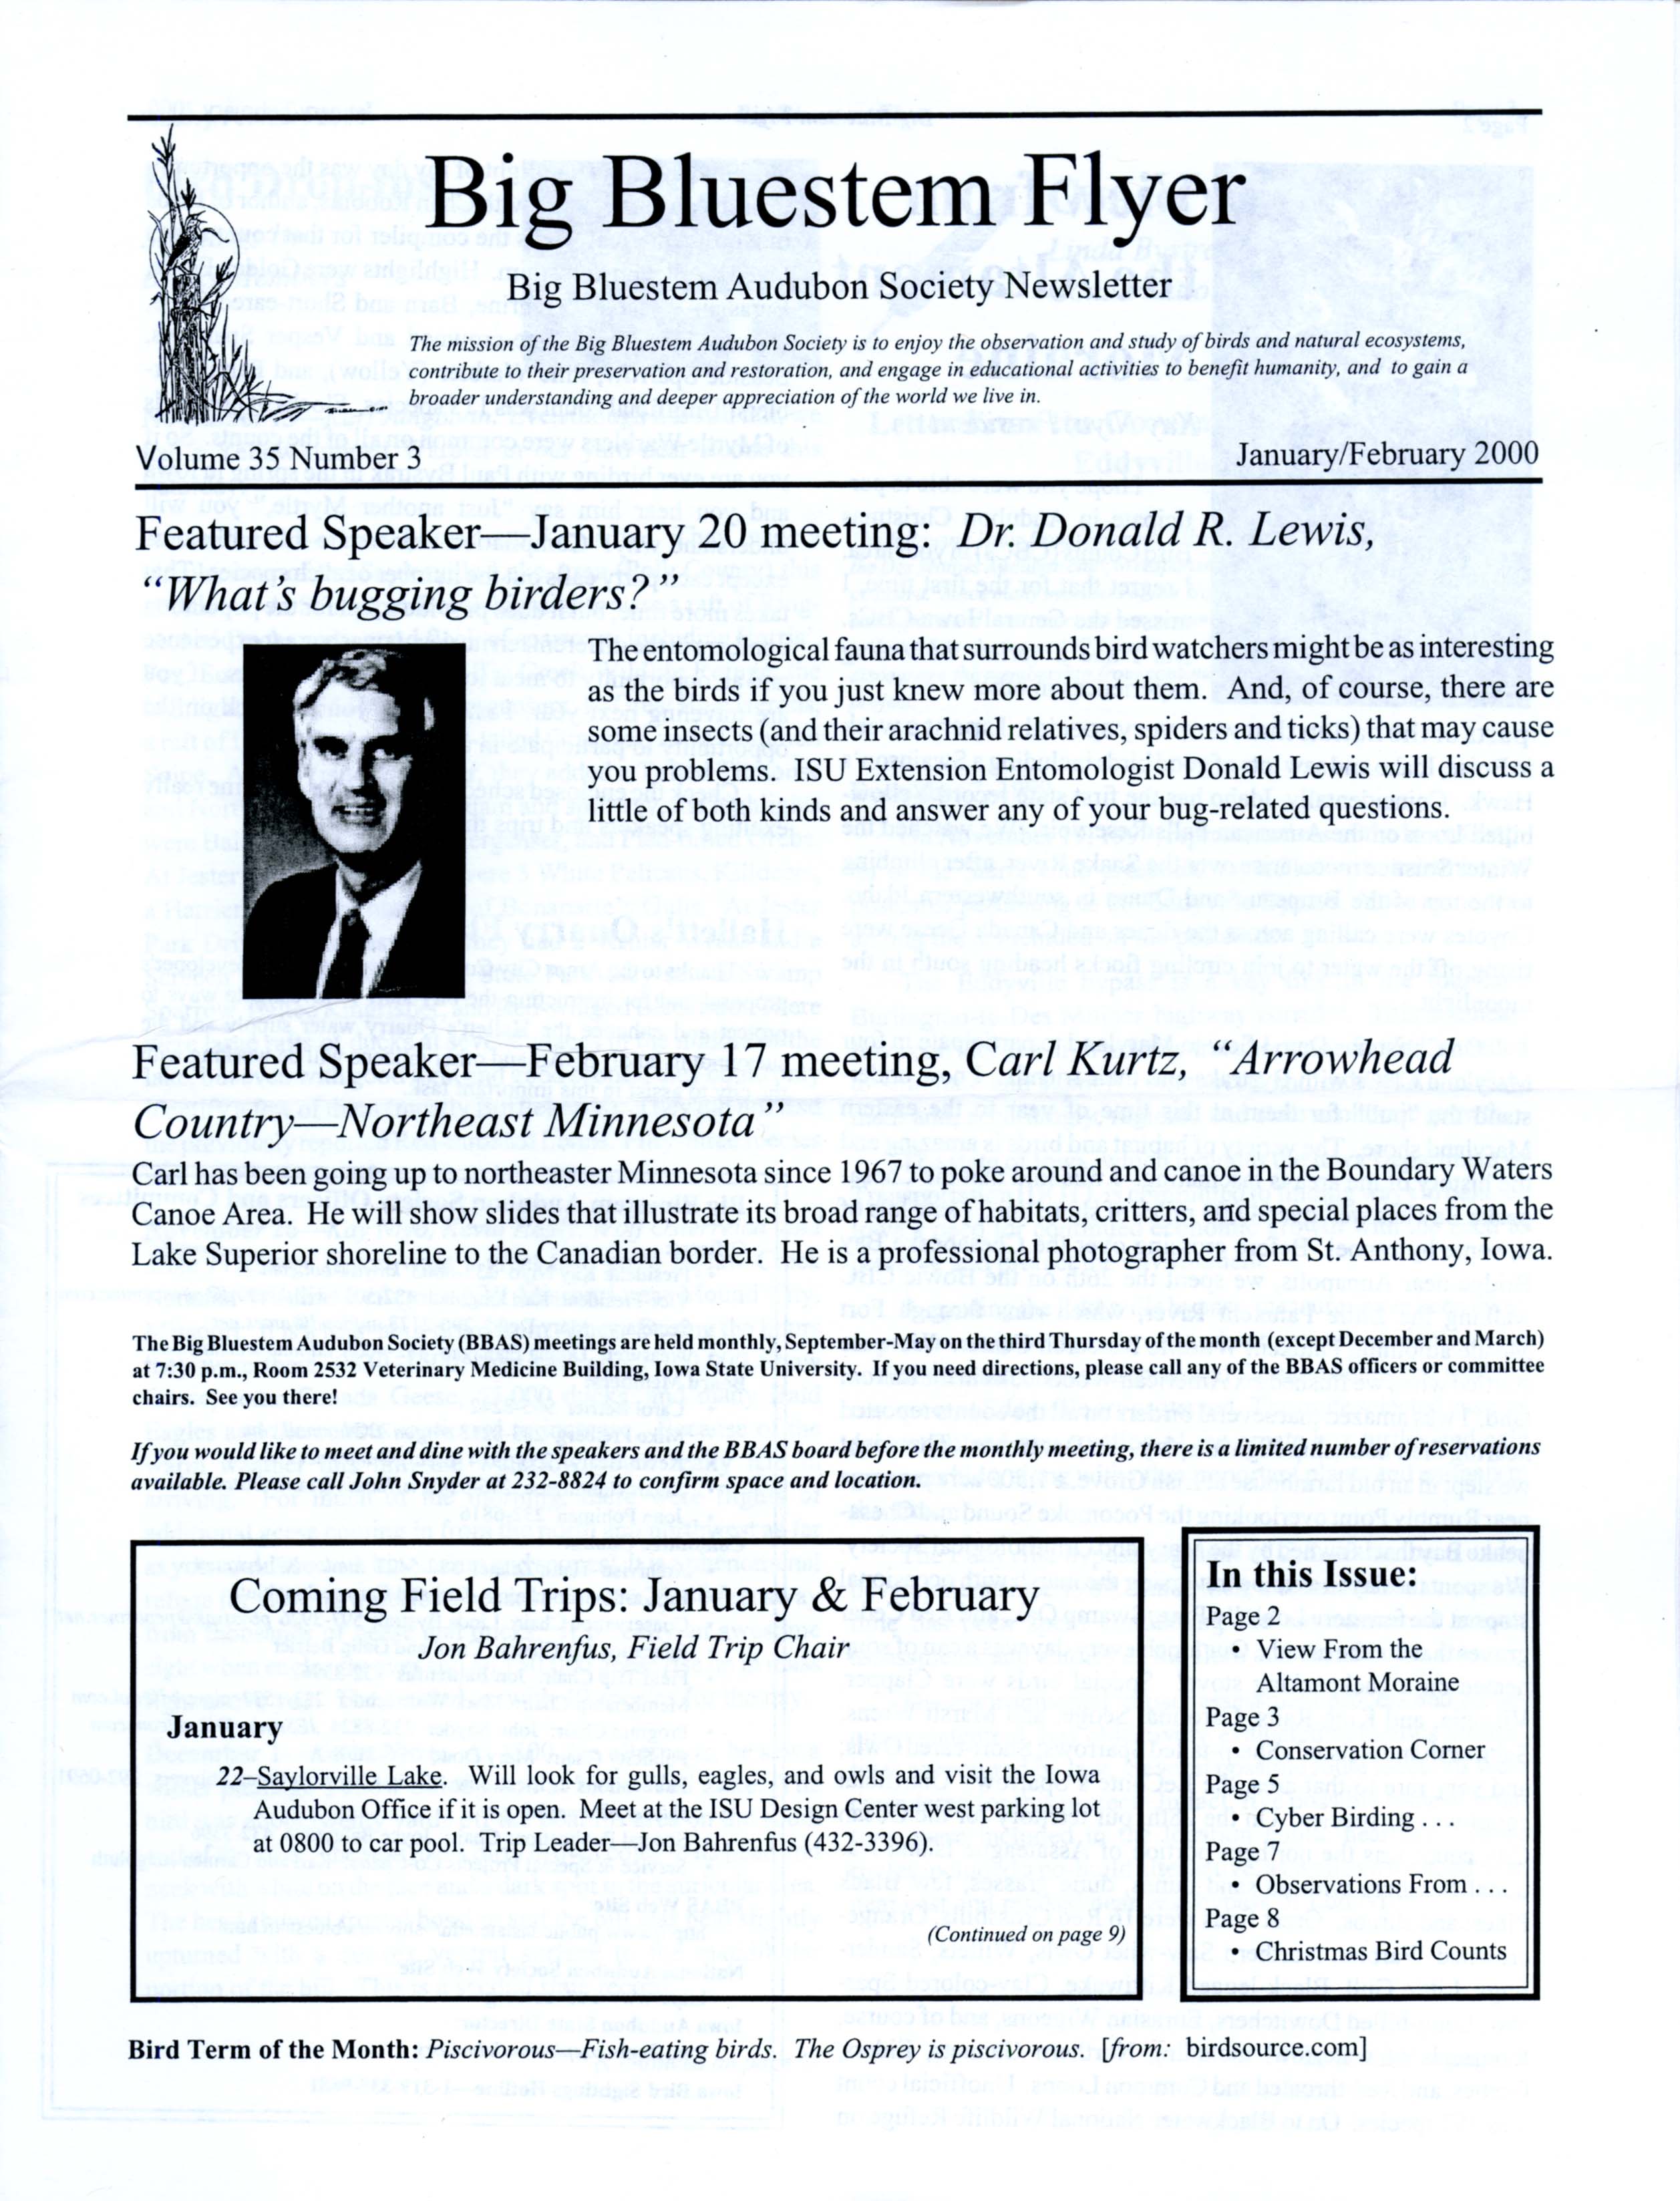 Big Bluestem Flyer, Volume 35, Number 3, January/February 2000